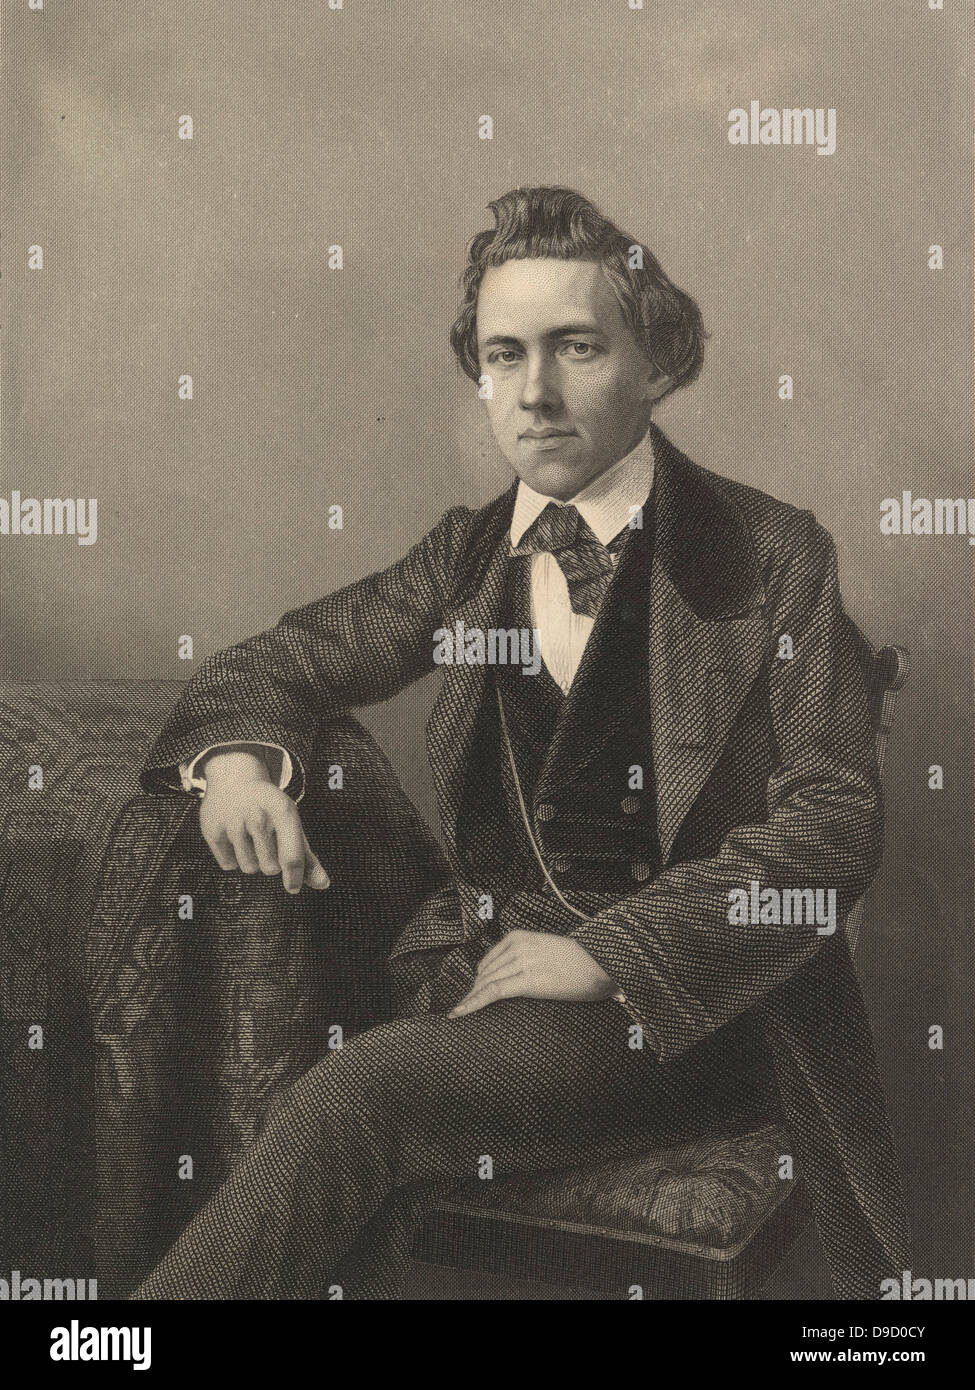 Paul Murphy (1837-1884), American Chess player. Engraving c1861. Stock Photo